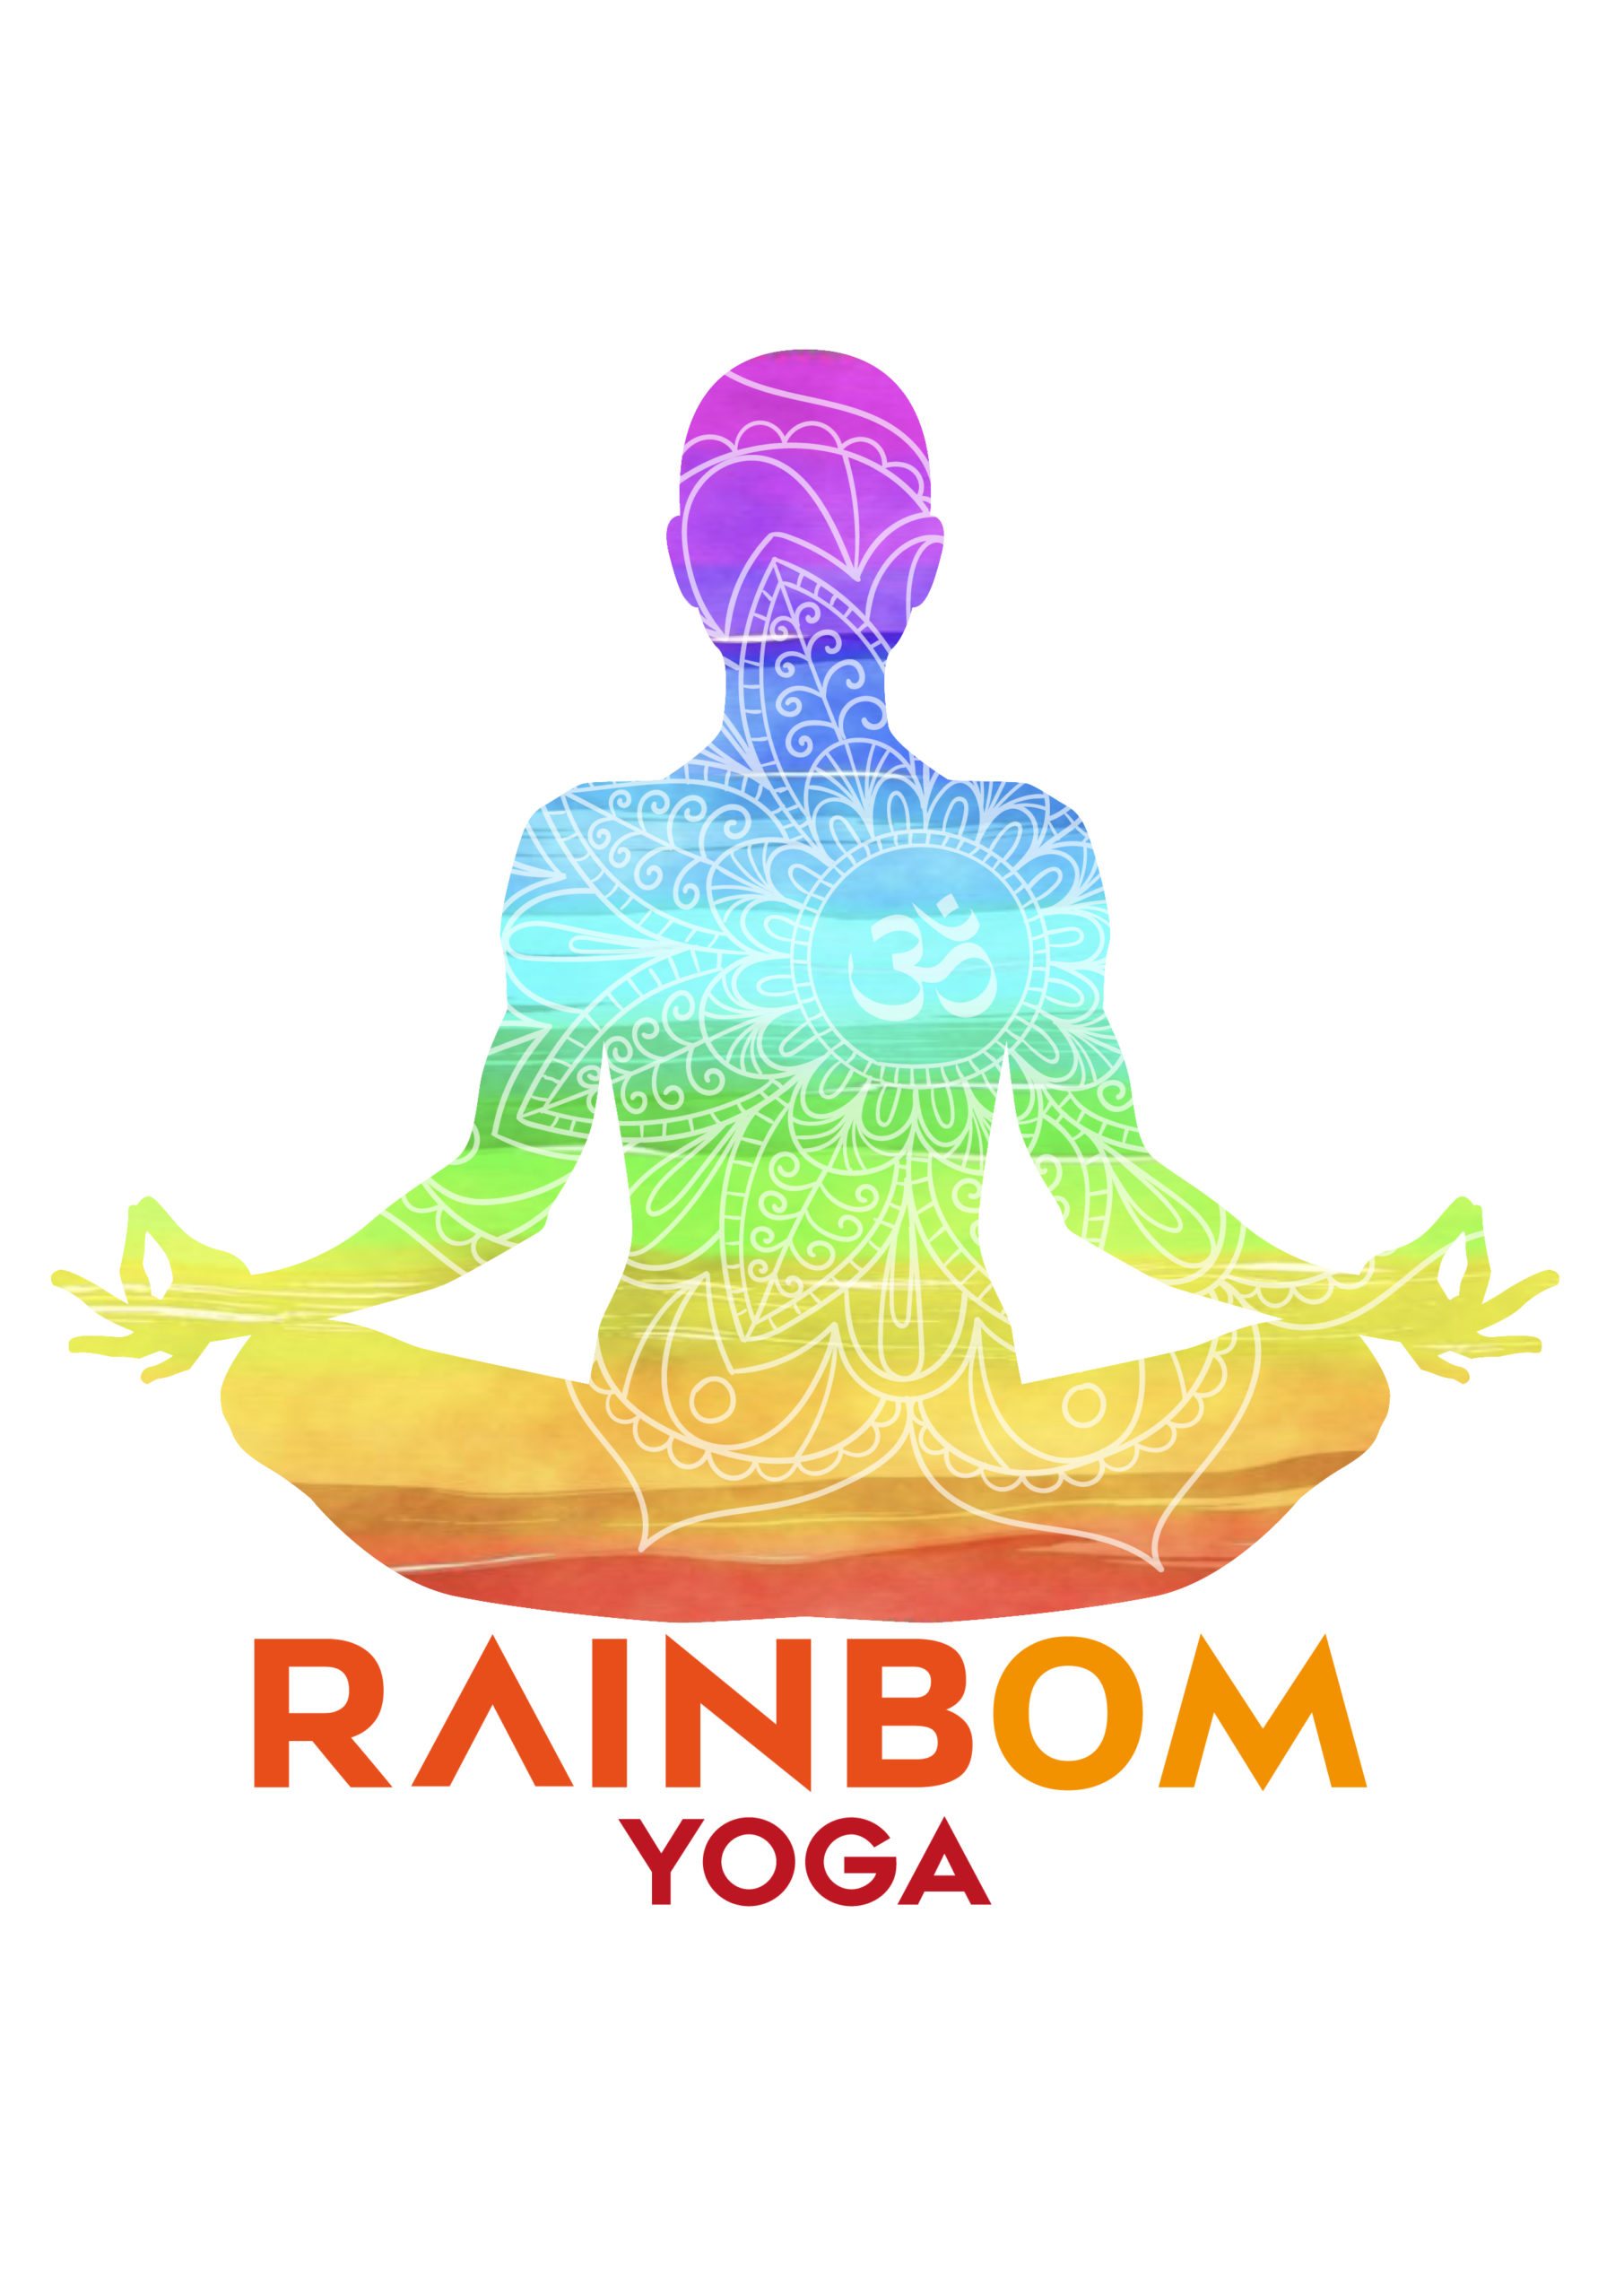 RainbOM Yoga